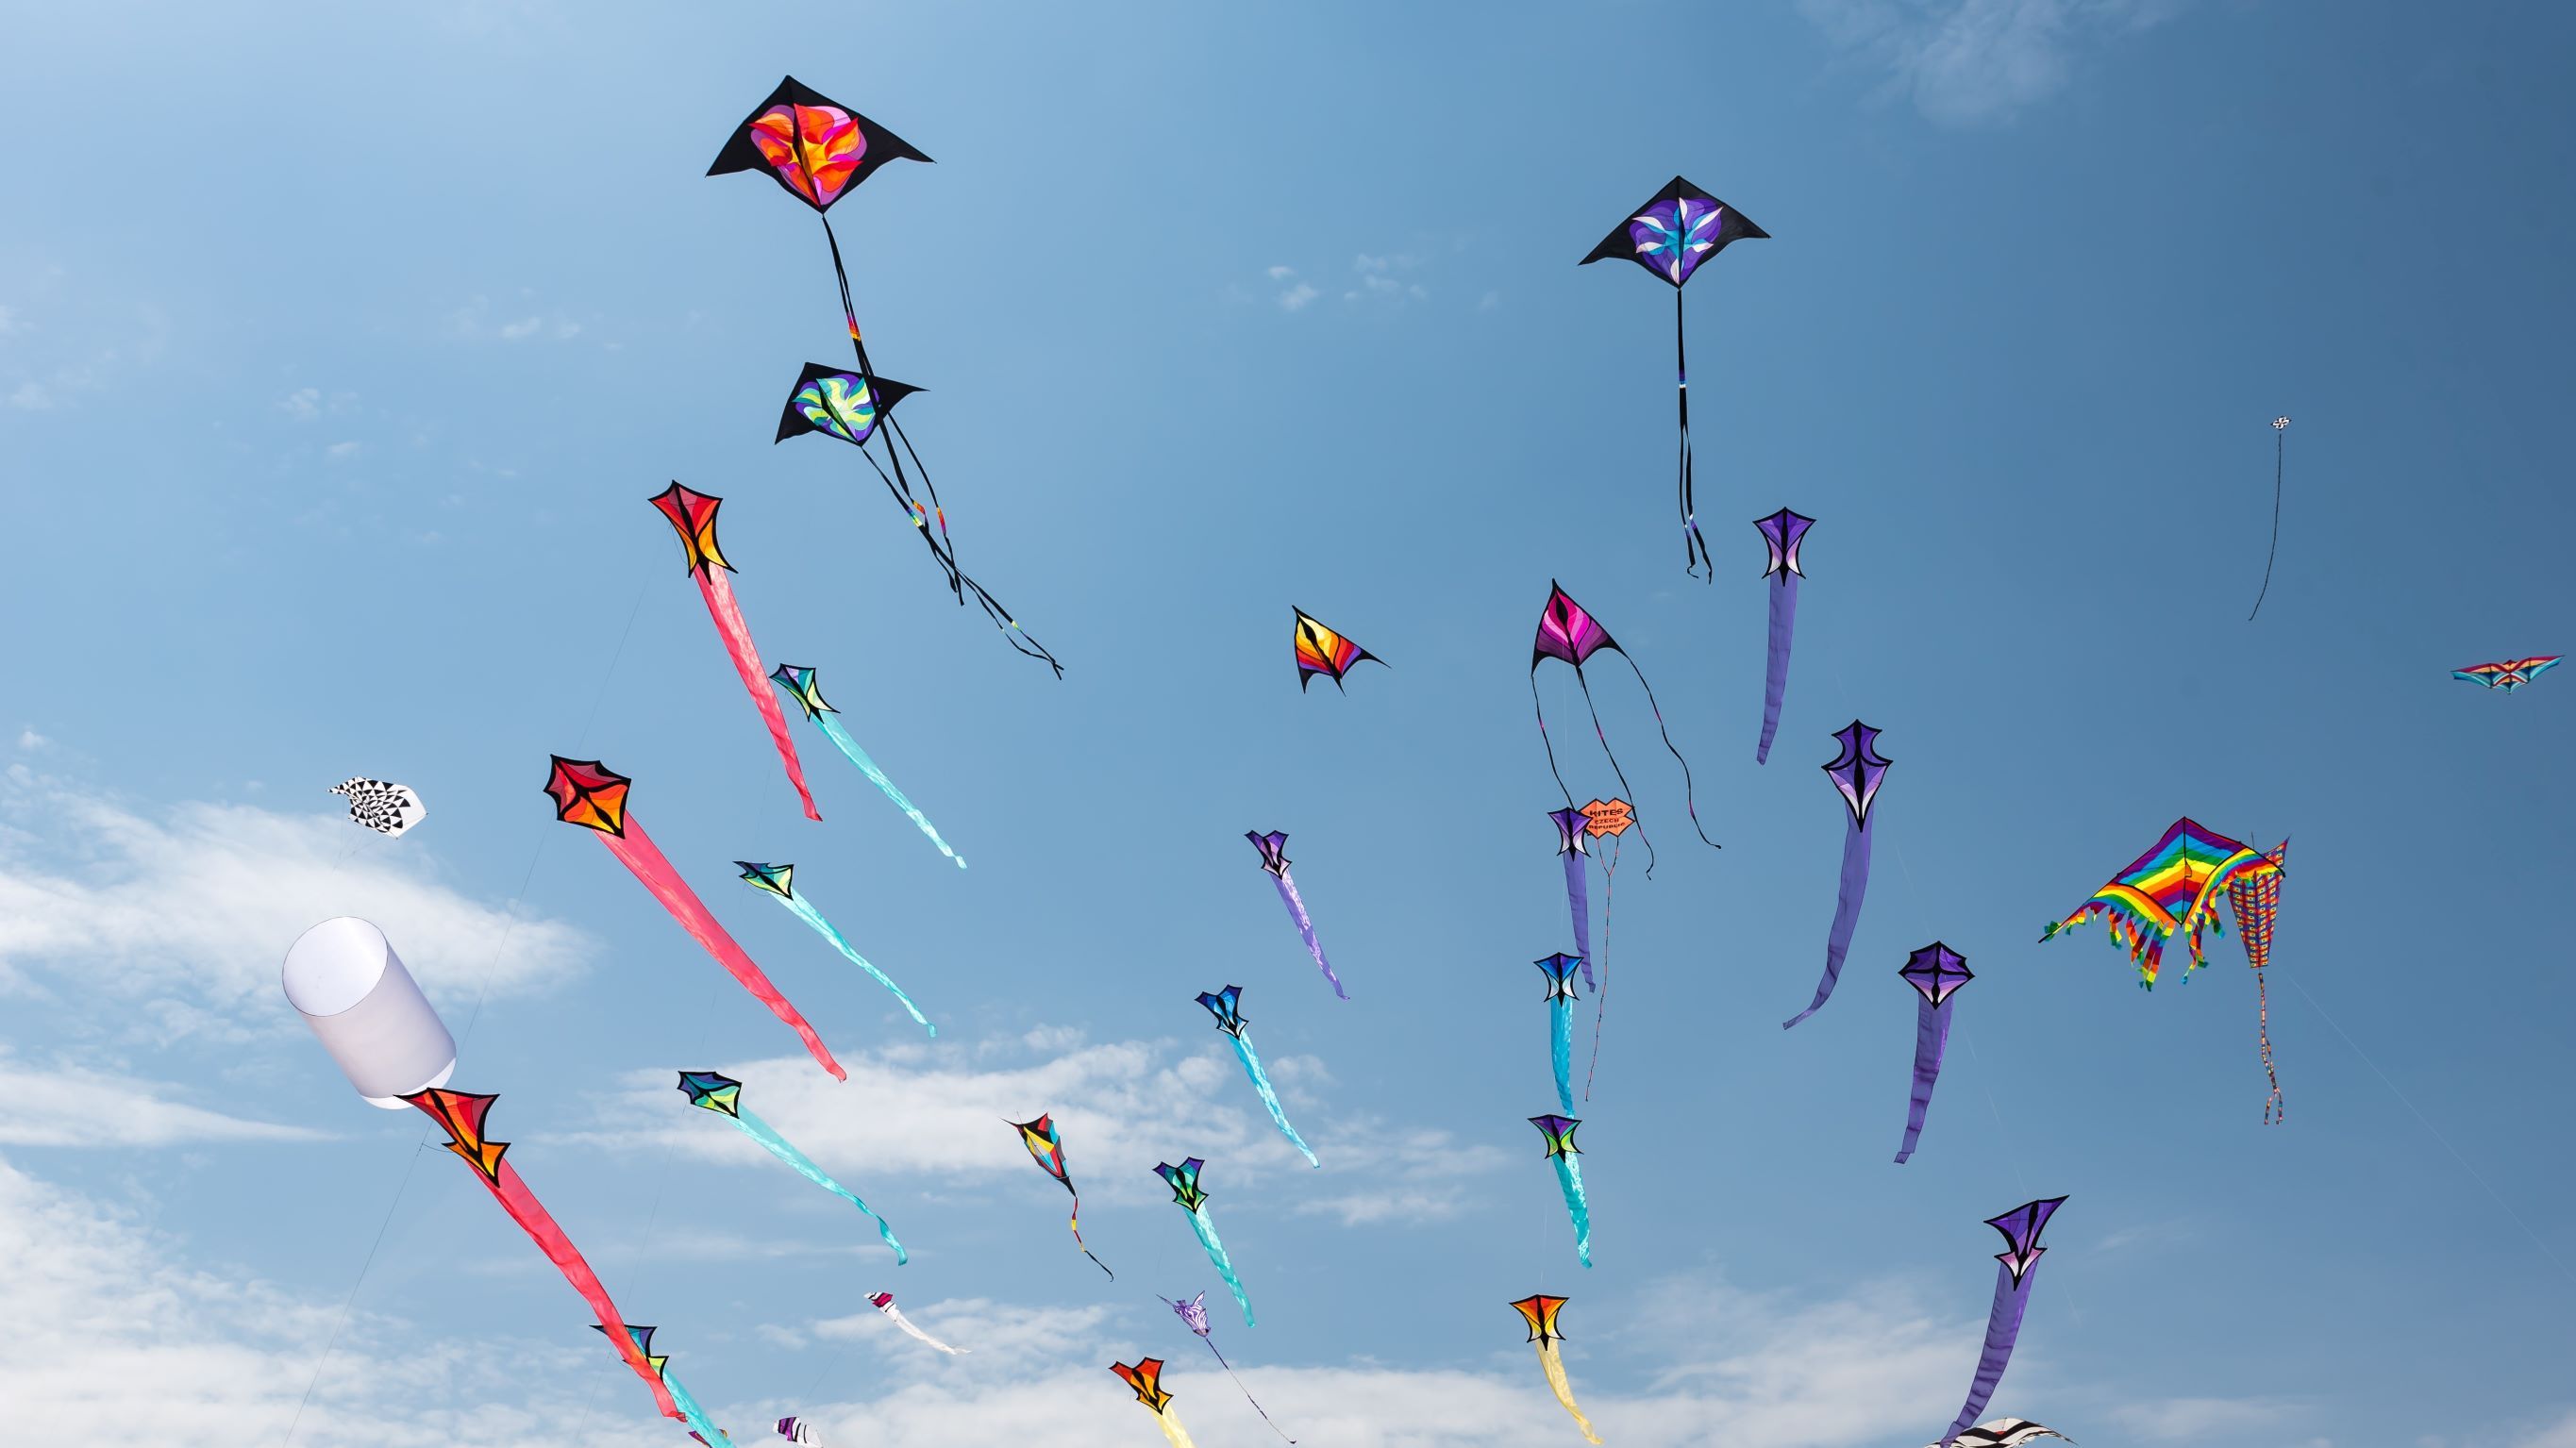 Kites in a blue sky.